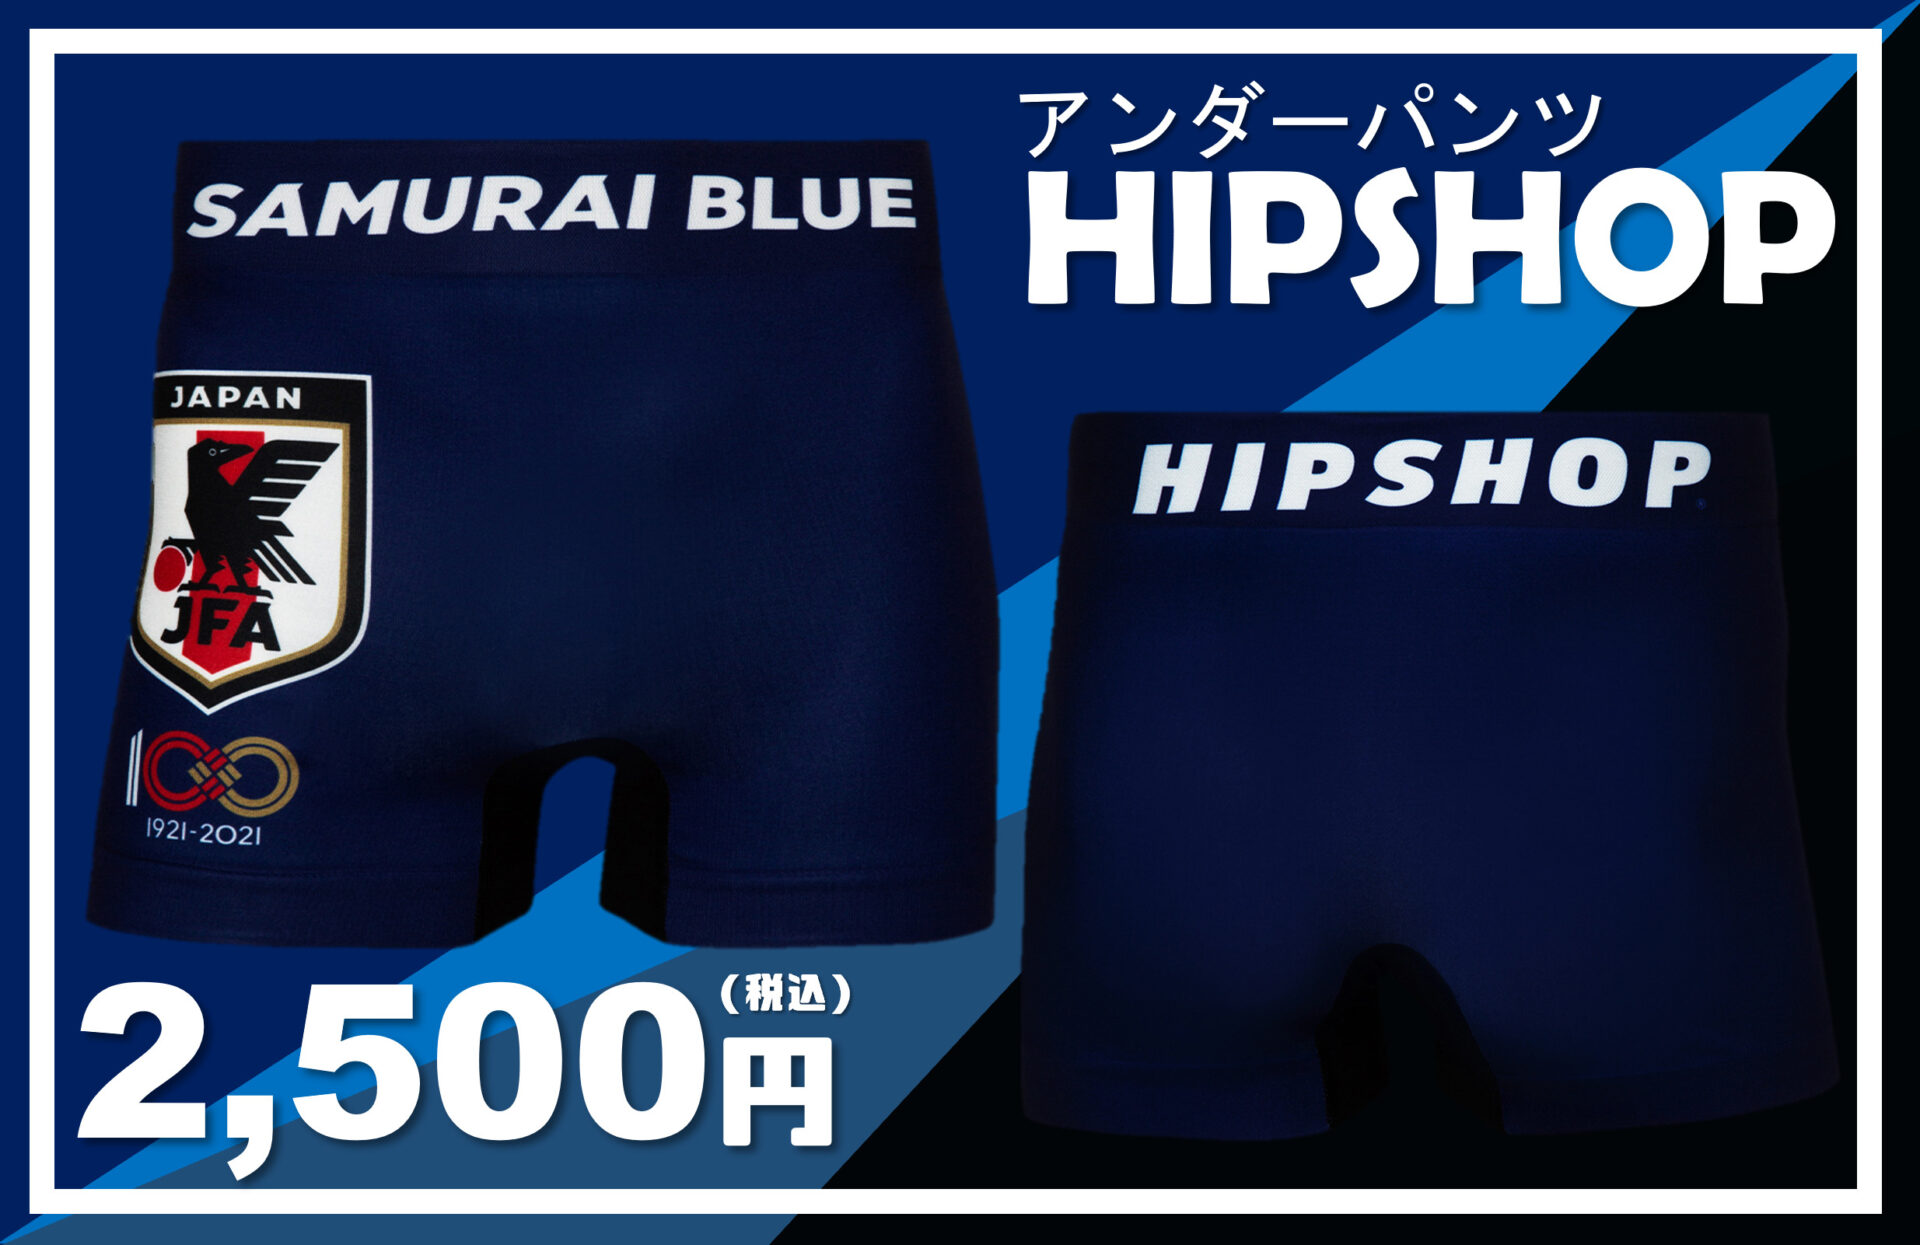 【HIPSHOP:アンダーパンツ】SAMURAI BLUE